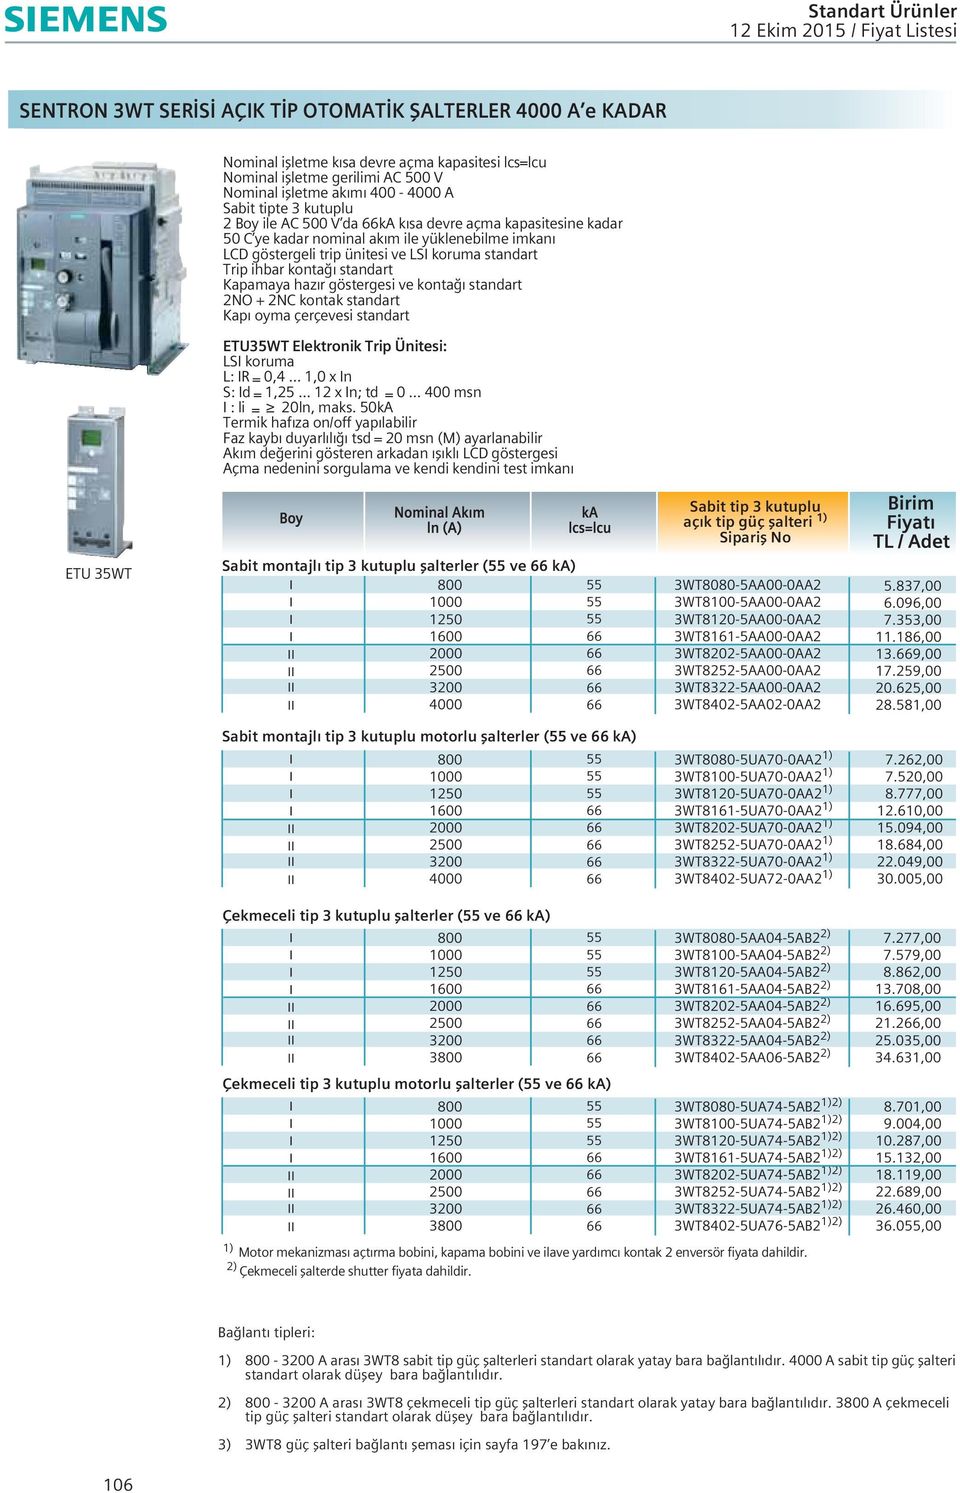 r göstergesi ve konta standart 2O + 2C kontak standart Kap oyma çerçevesi standart ETU35WT Elektronik Trip Ünitesi: LSI koruma L: IR 0,4... 1,0 x In S: Id 1,25... 12 x In; td 0.